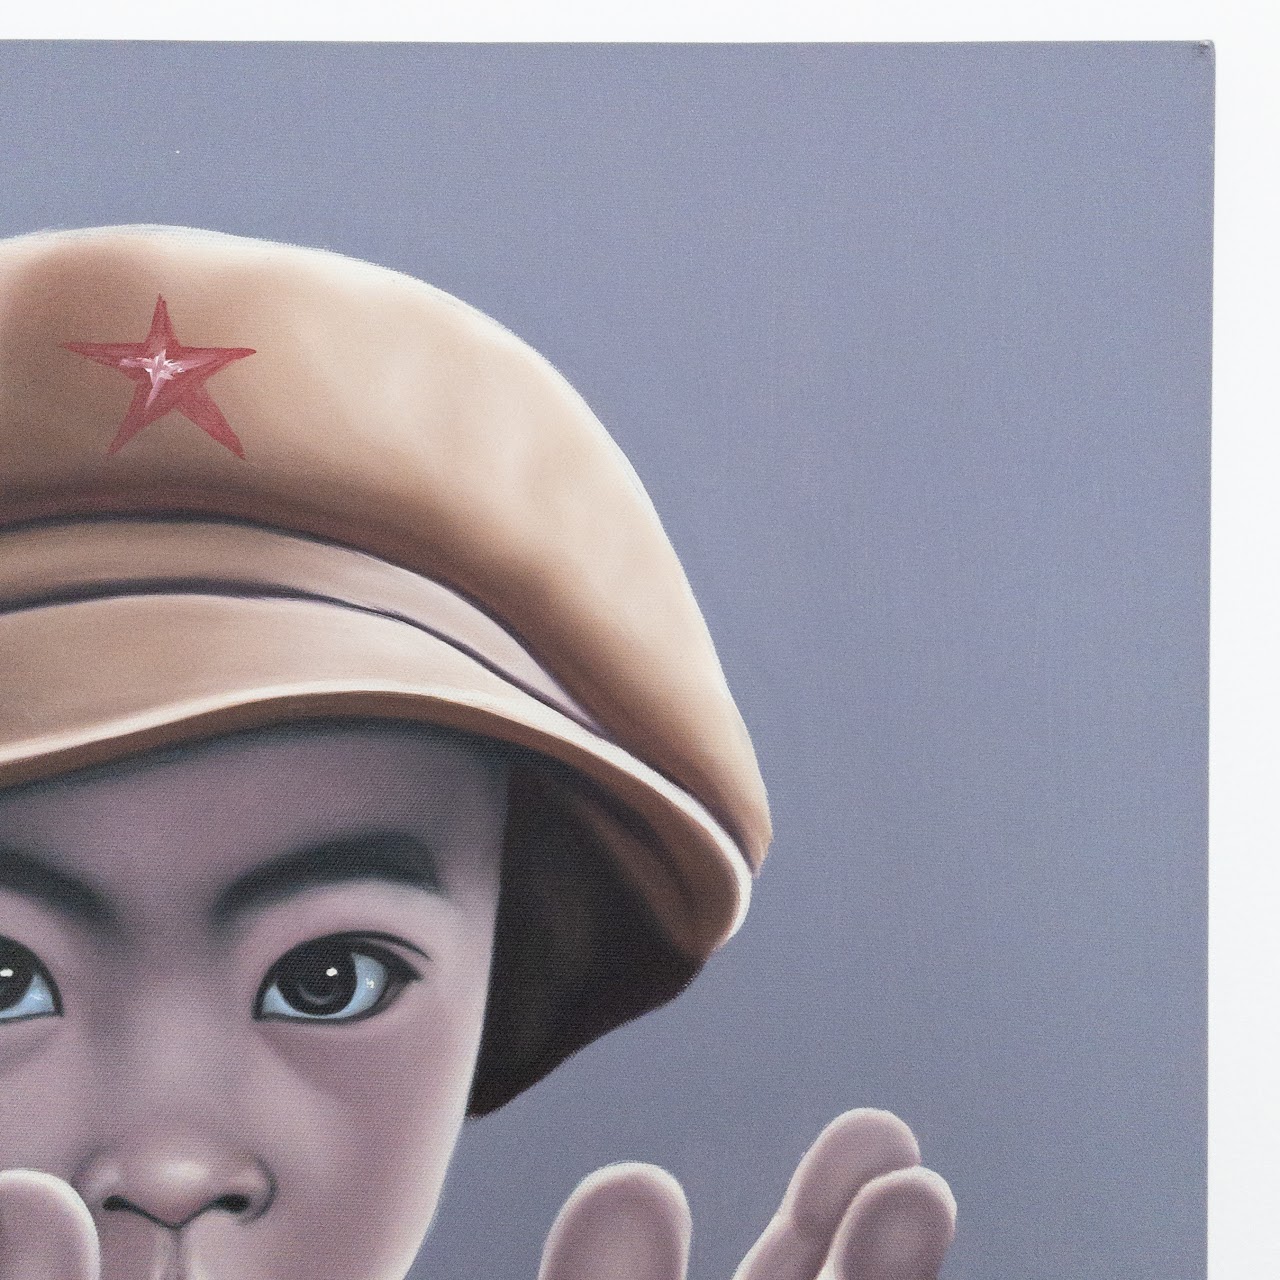 Red Star Painting After Zhu Yi Yong